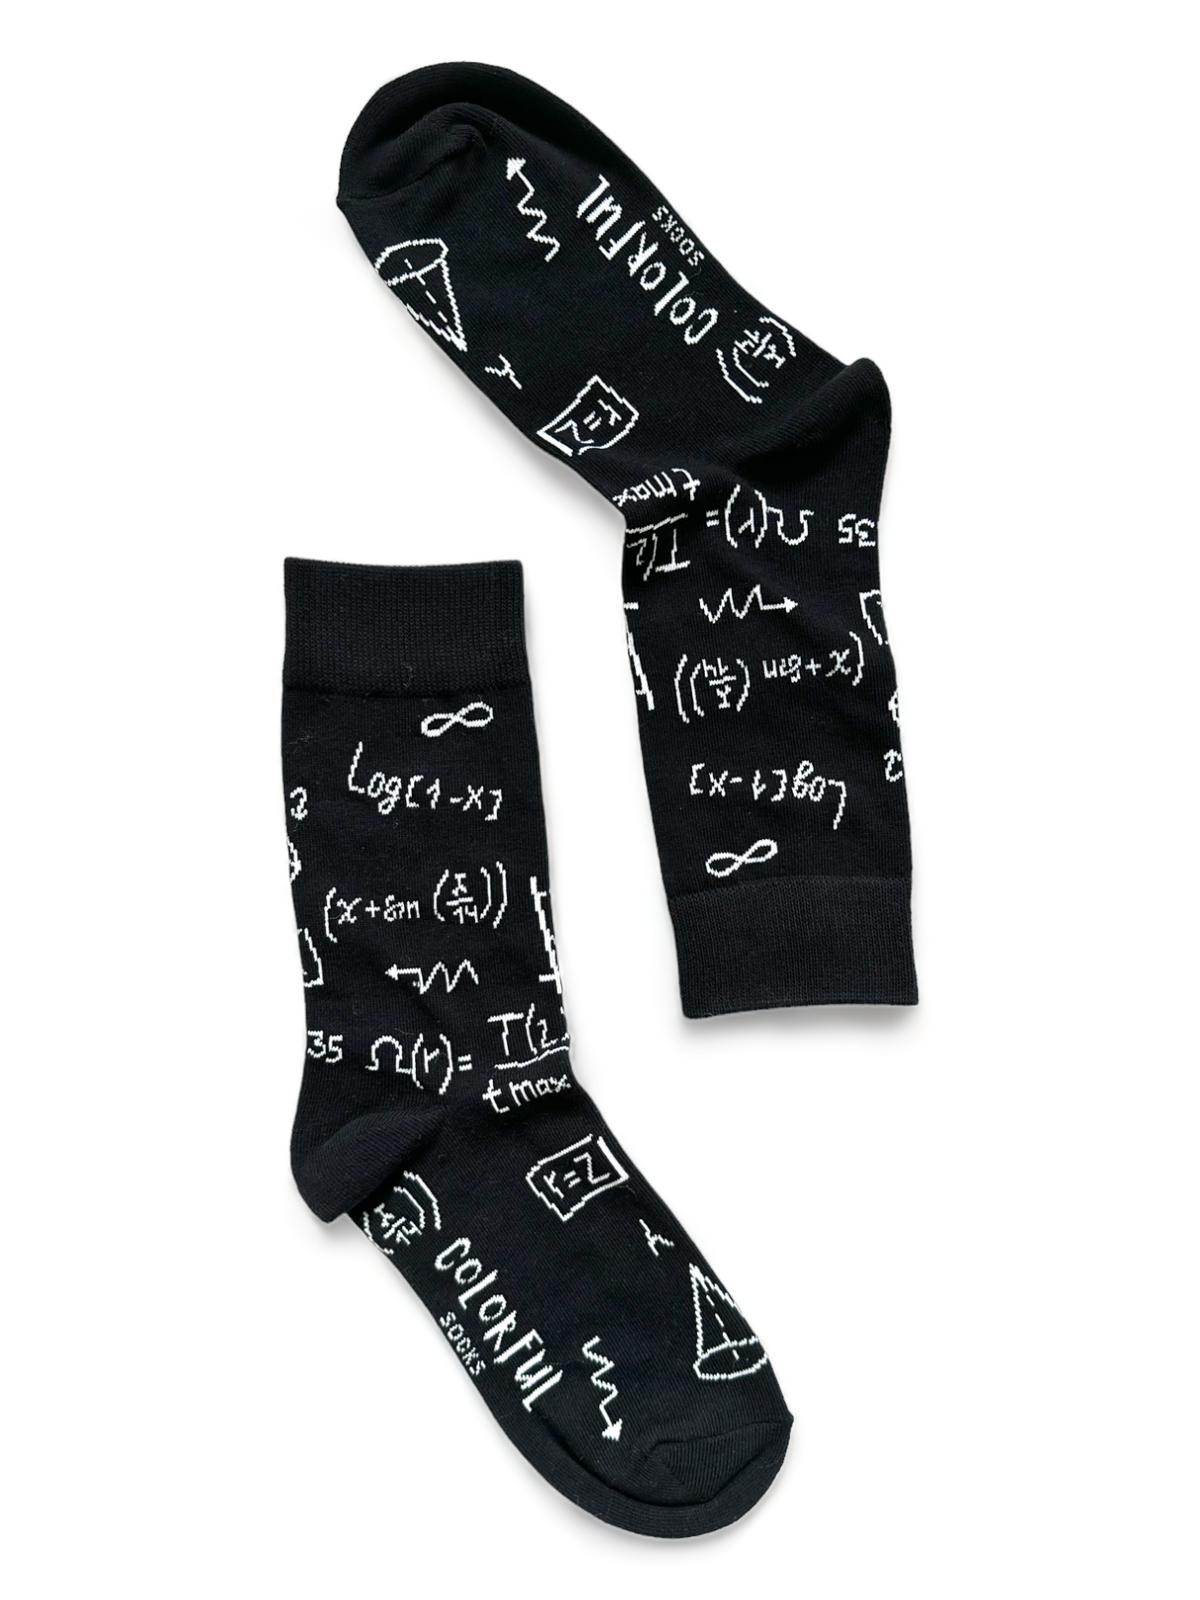 math socks